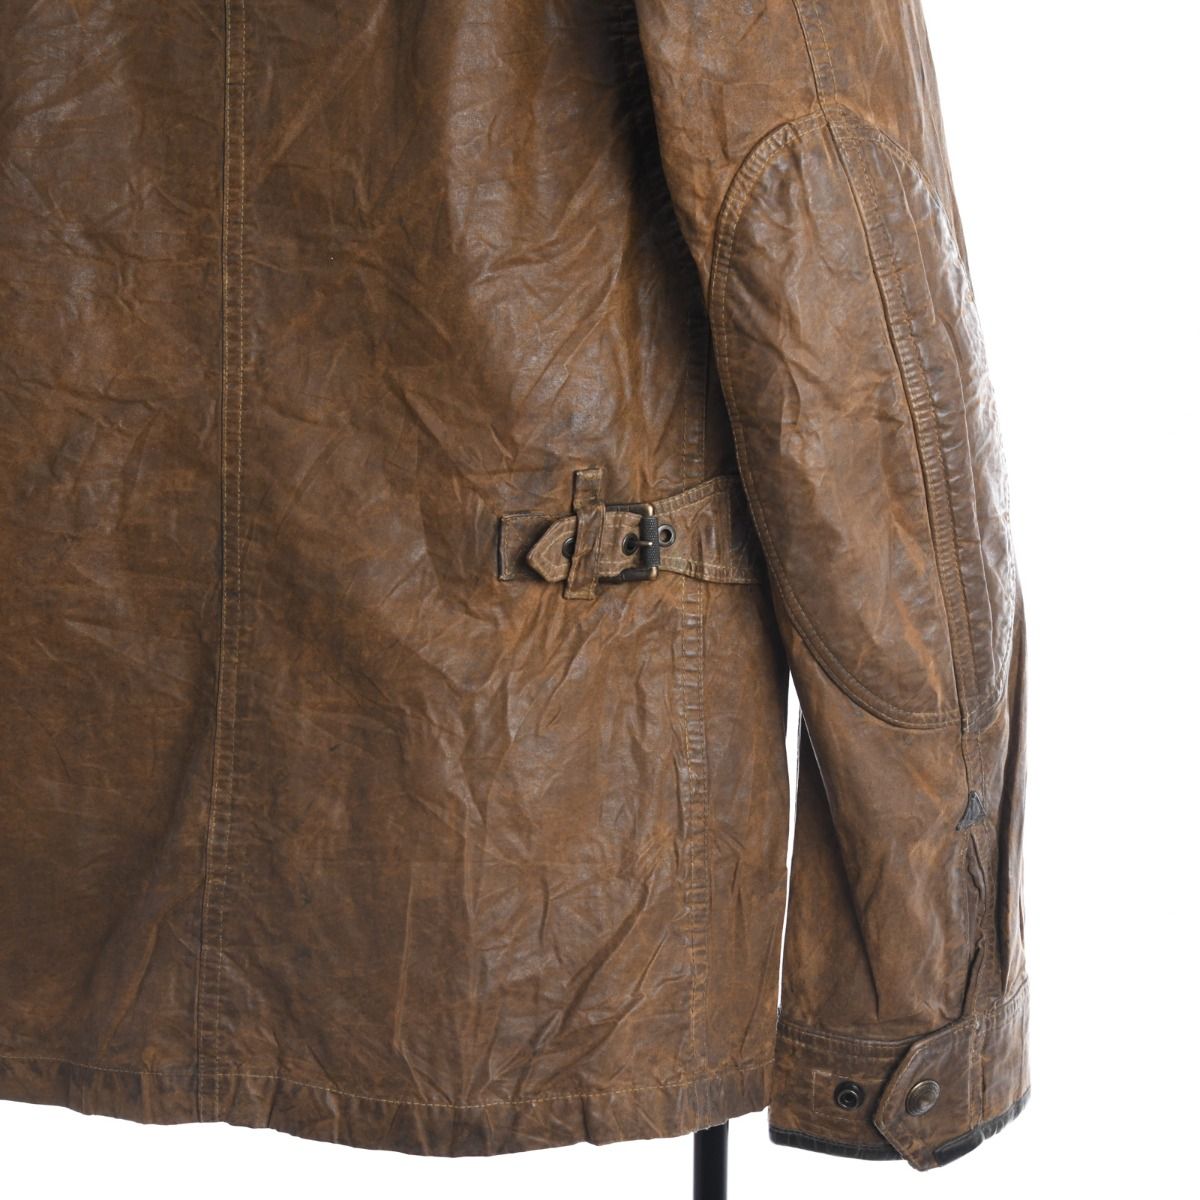 Polo Ralph Lauren Williamsburg Waxed Cotton Trail Jacket